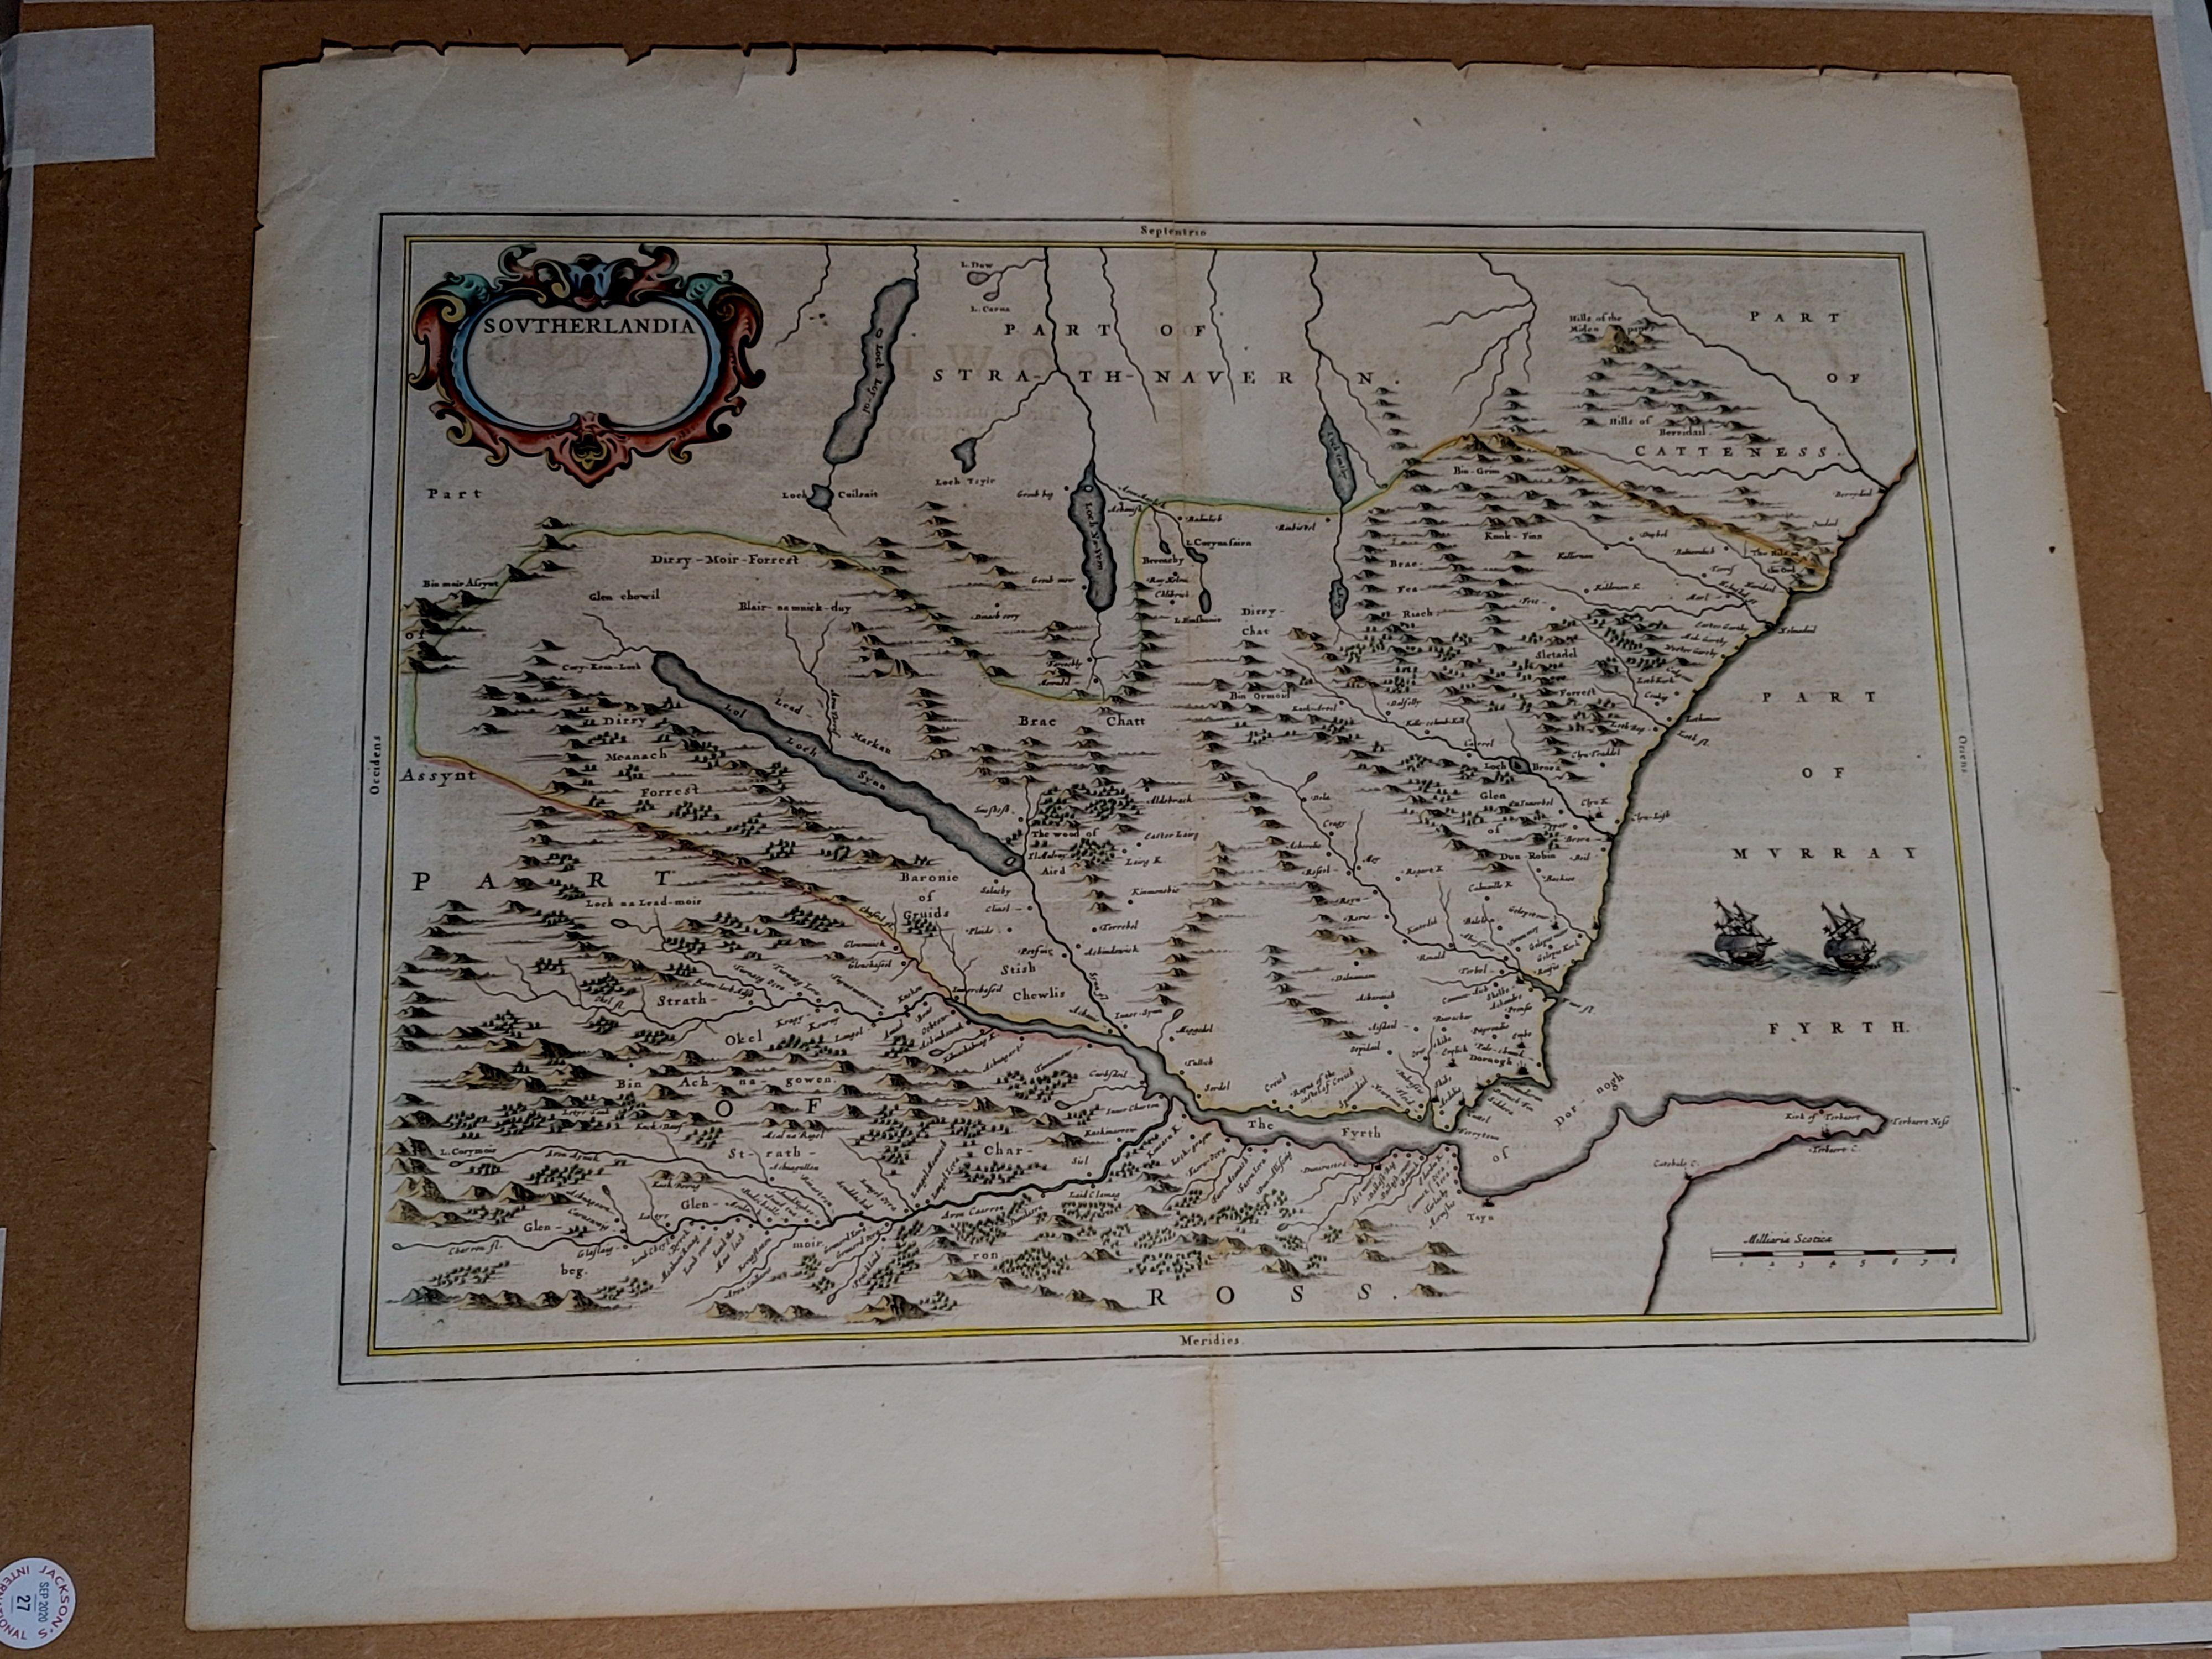 1654 Joan Blaeu map of the 
Sutherland, Scotland, entitled 
